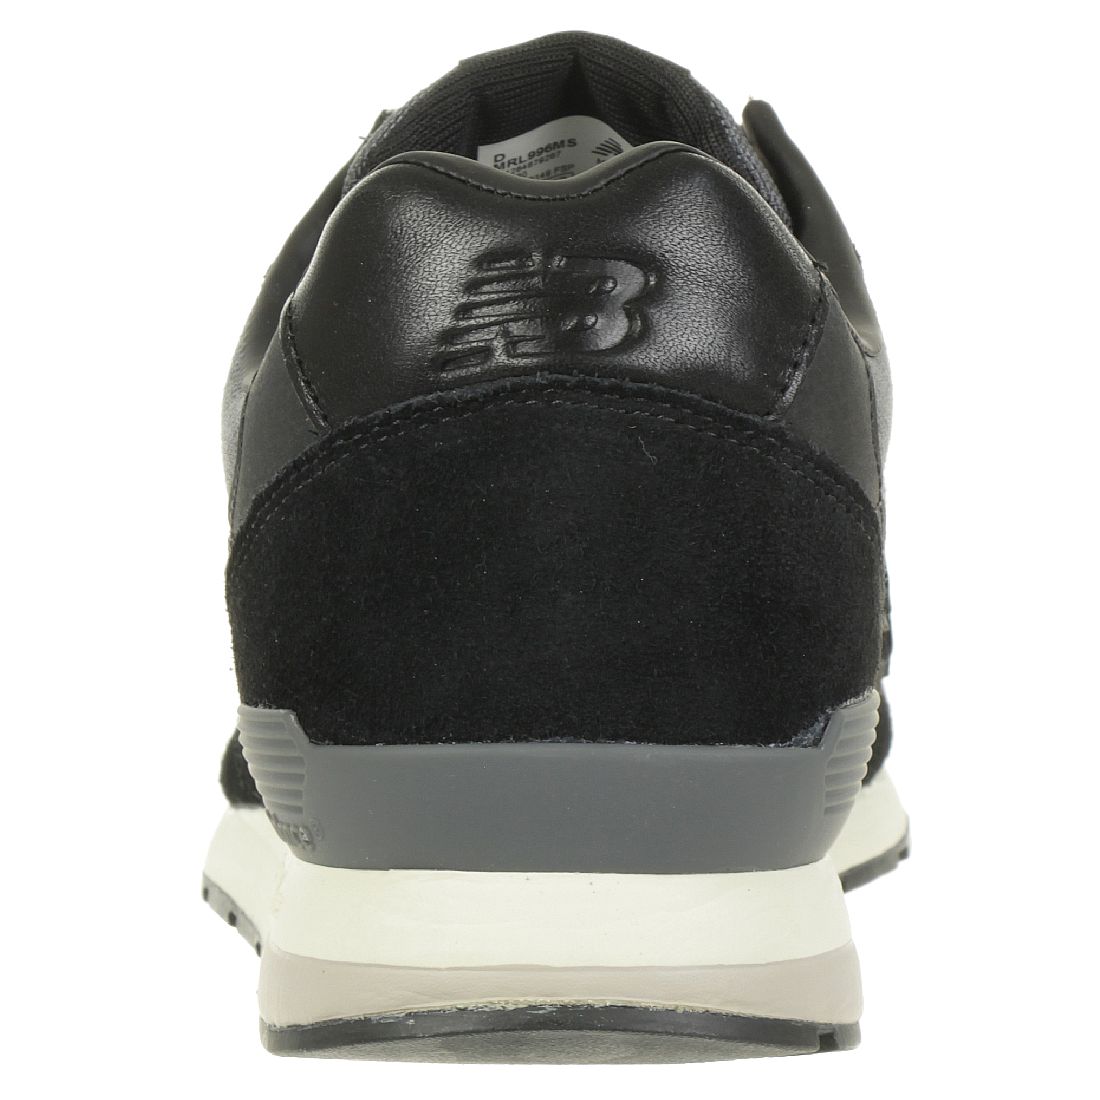 New Balance MRL996MS Classic Sneaker Herren Schuhe schwarz 996